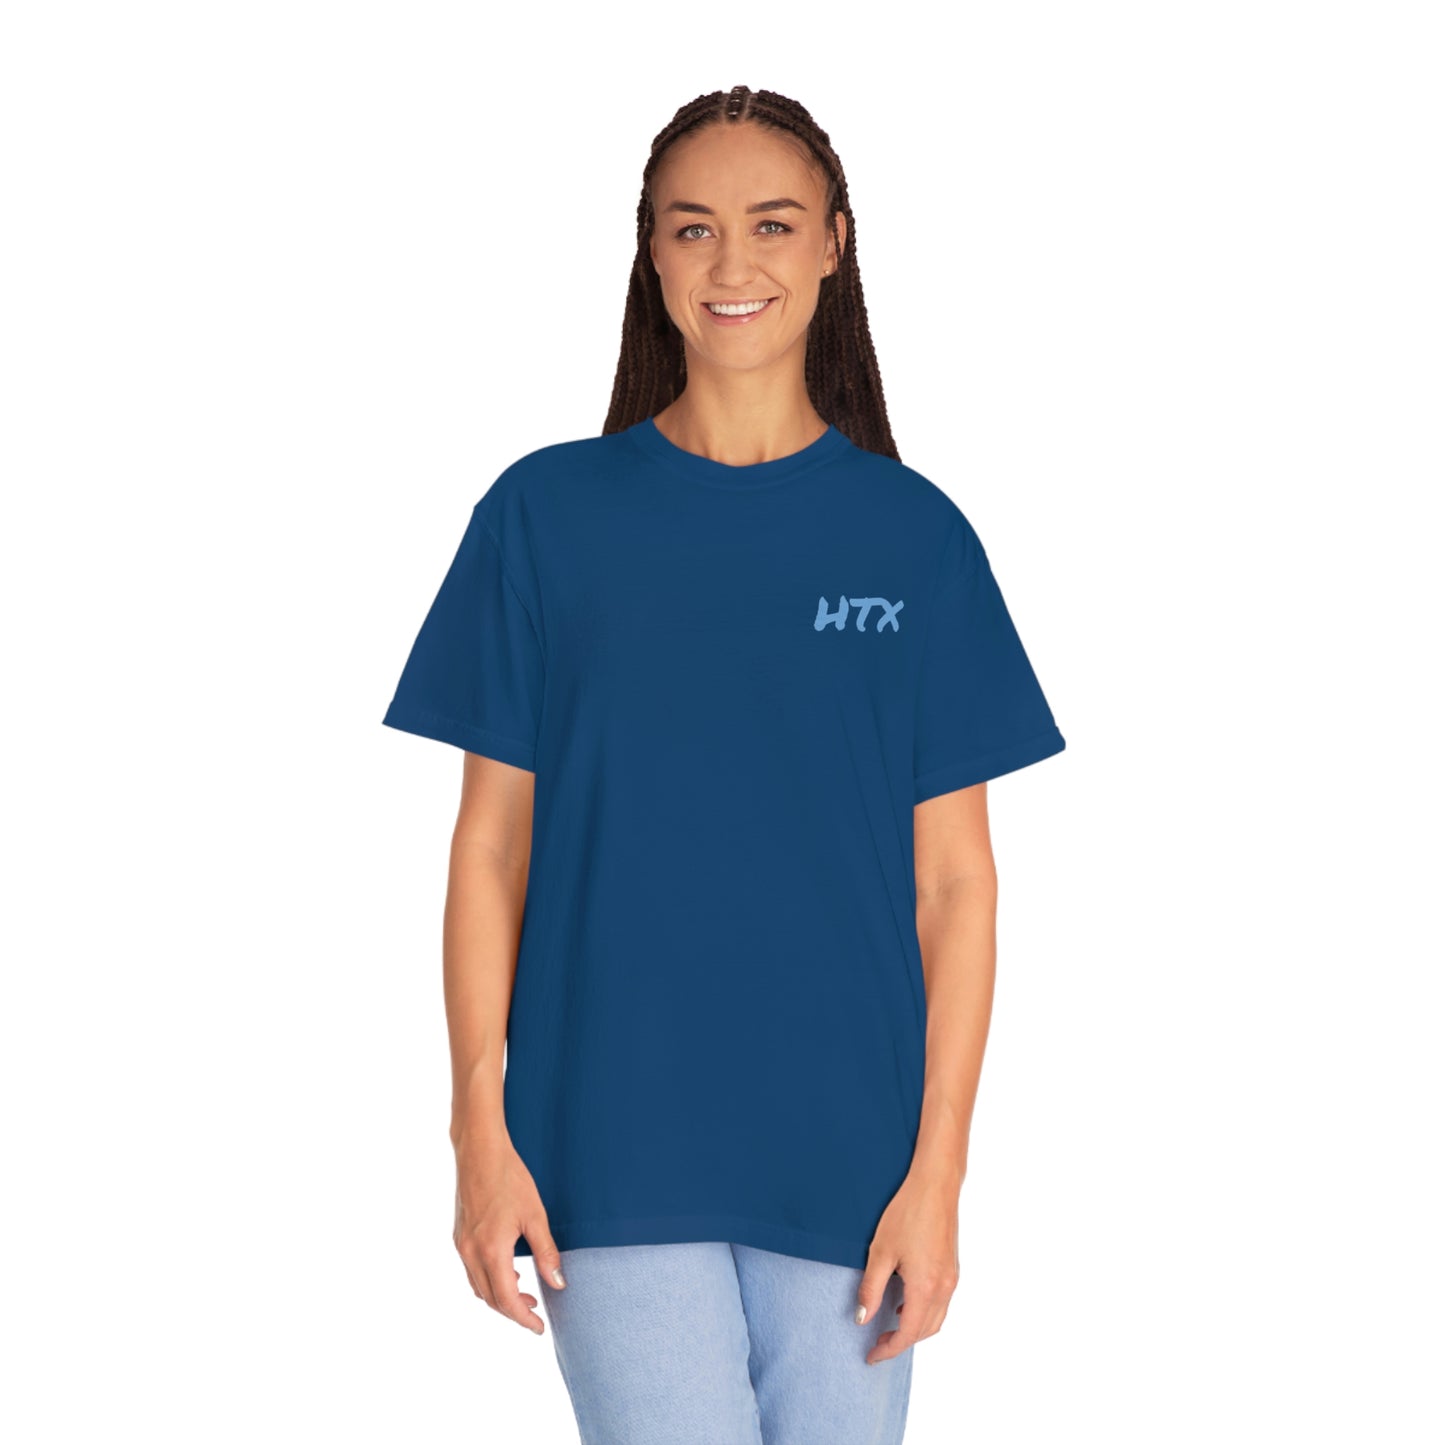 Official Swilson "HTX" Shirt (Comfort Colors)